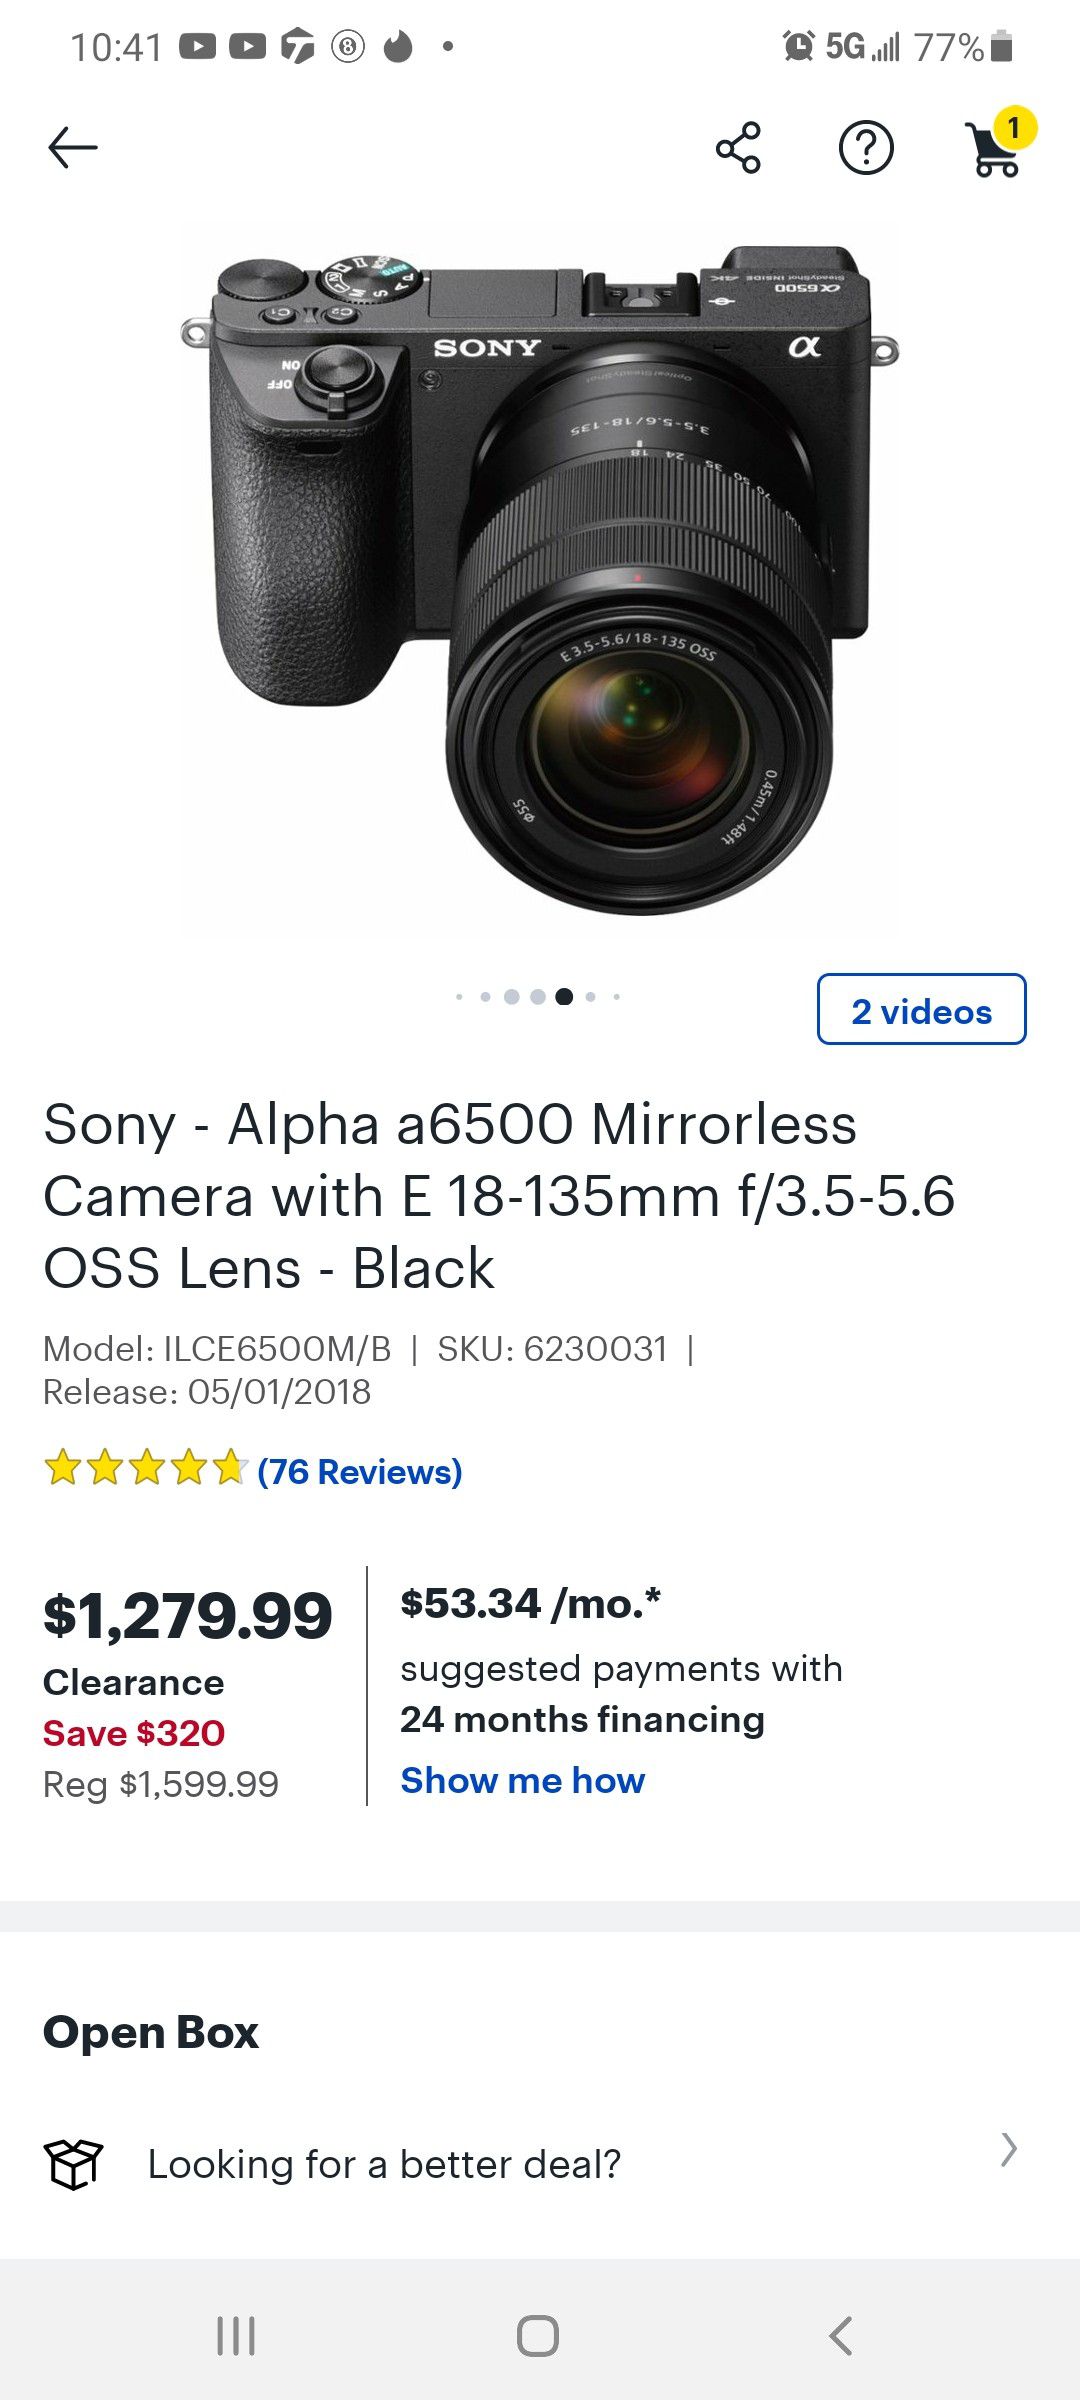 Sony alpha a6500 mirrorless camera